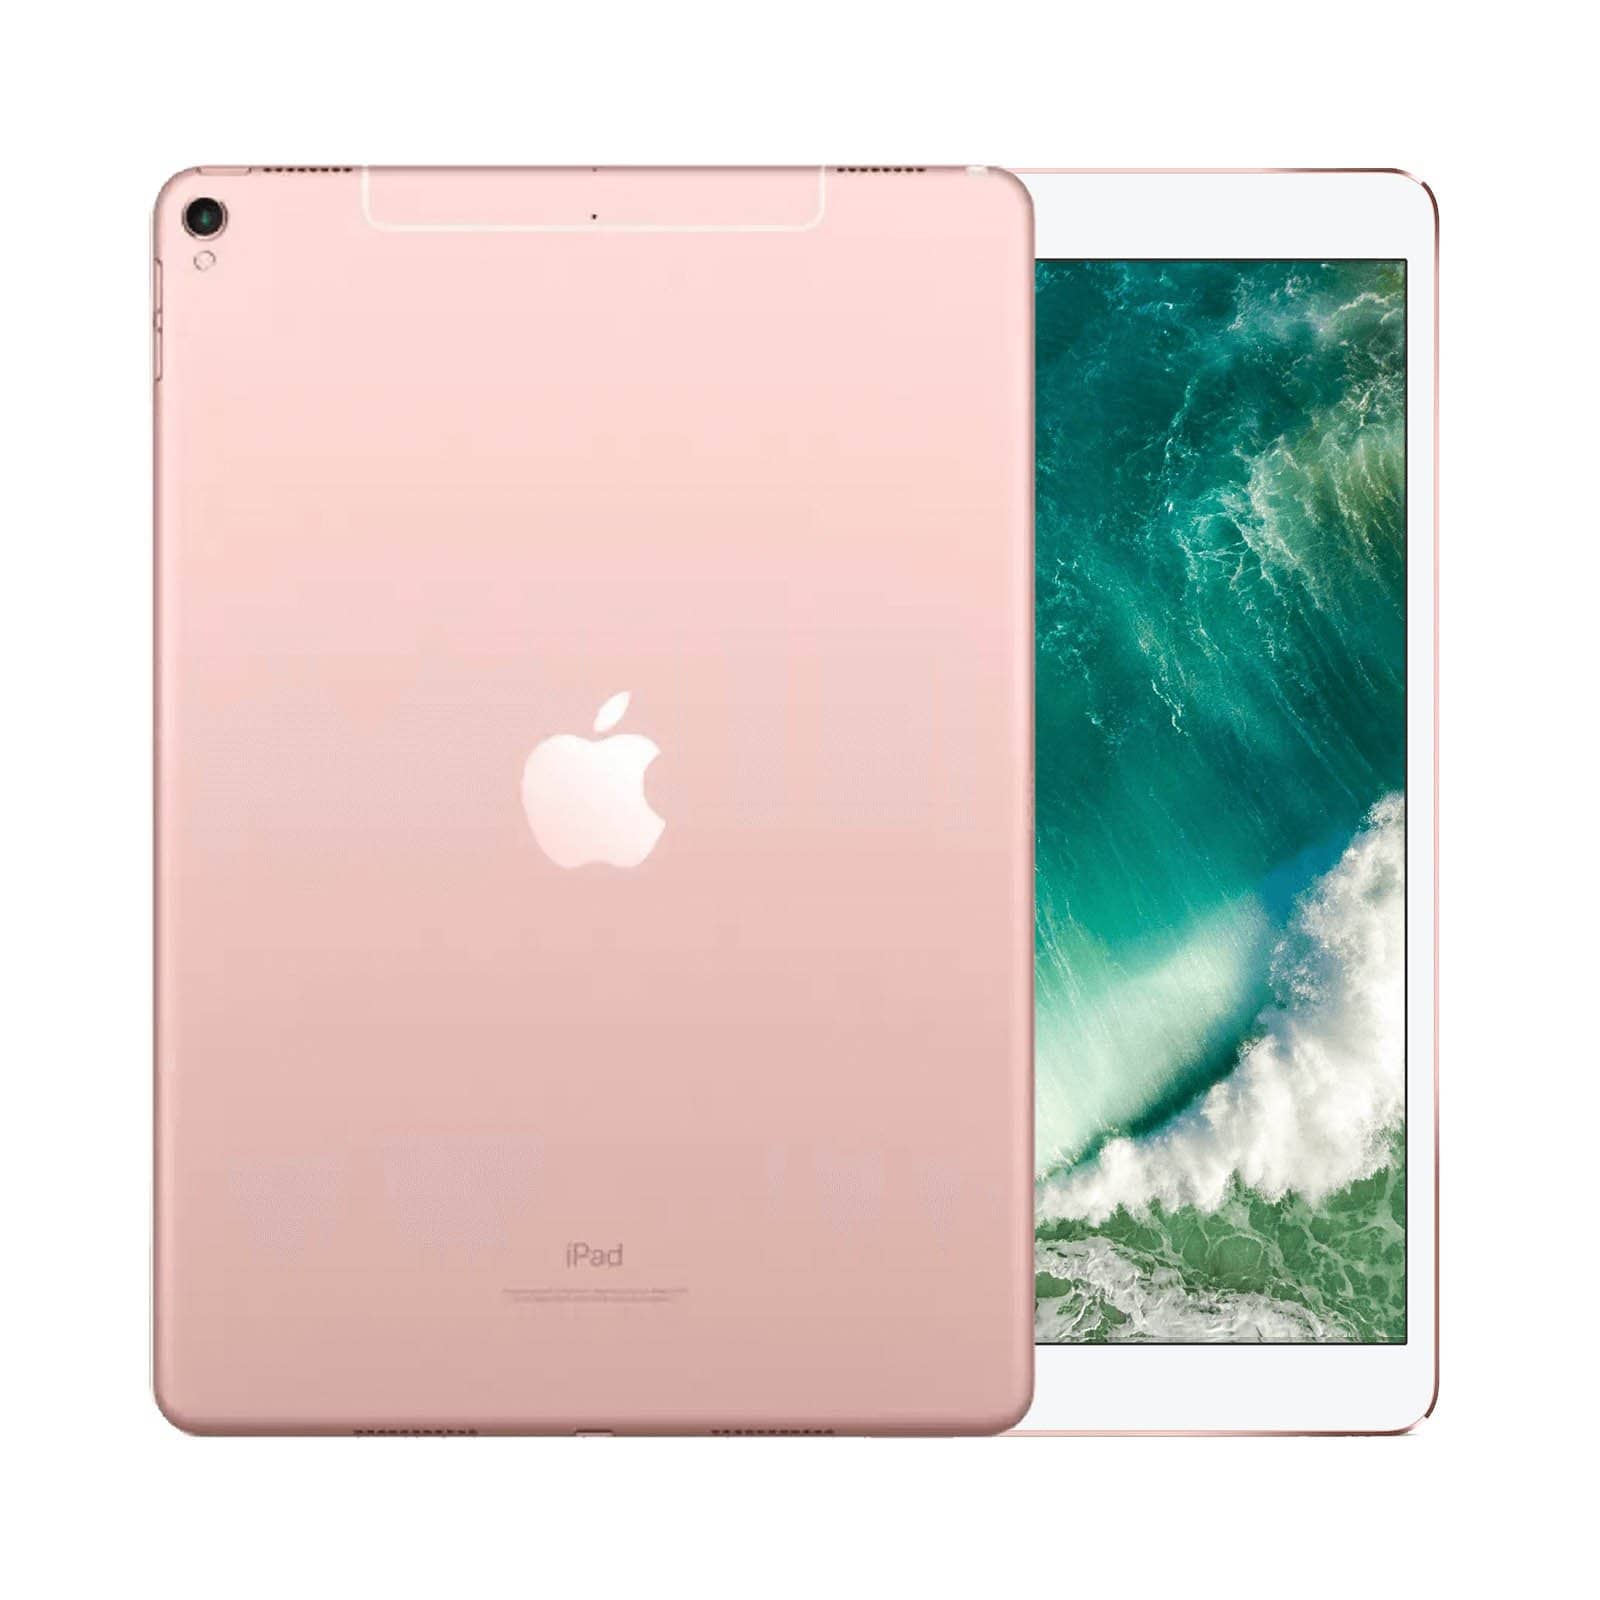 iPad Pro 10.5 Inch 256GB Rose Gold Pristine - Unlocked 256GB Rose Gold Pristine